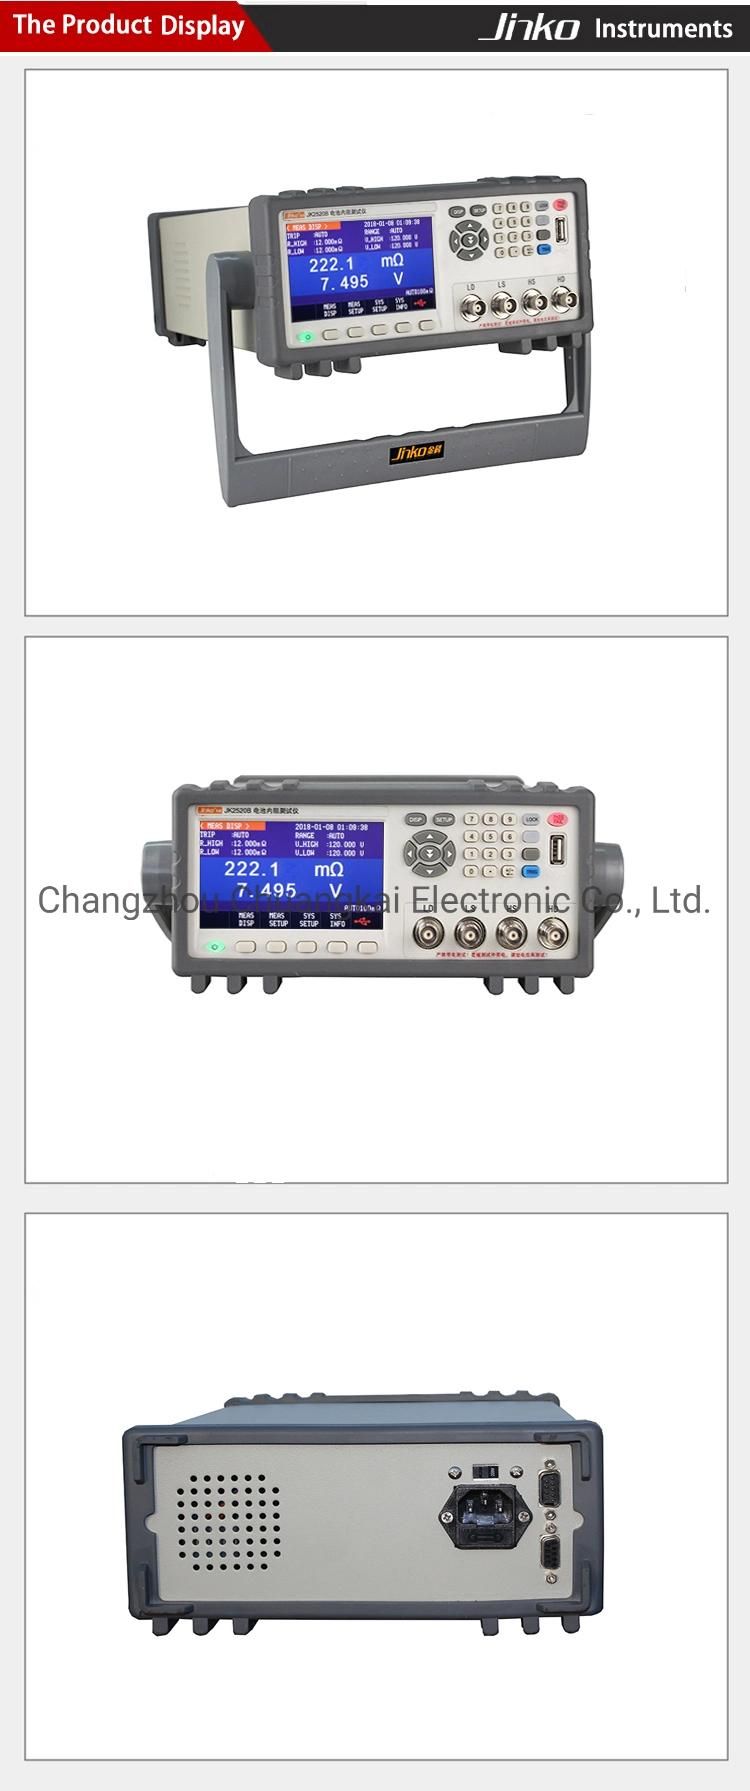 Jk2520b Battery Internal Resistance Meter Battery Tester